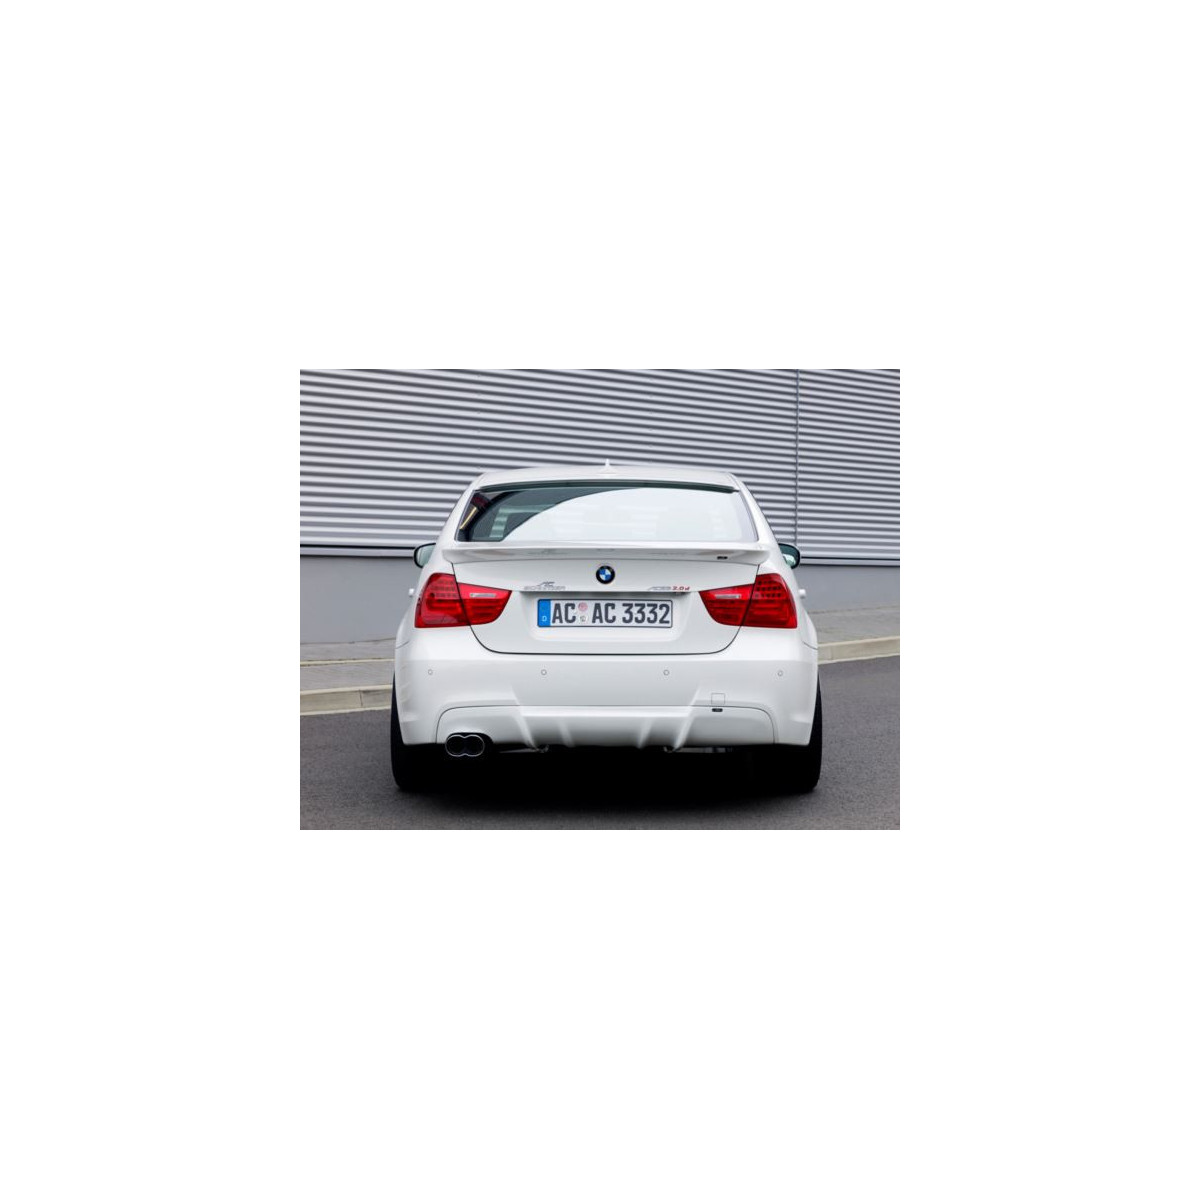 SPOILER BMW E90 05-11 ABS GLOSSY BLACK TYPE AC